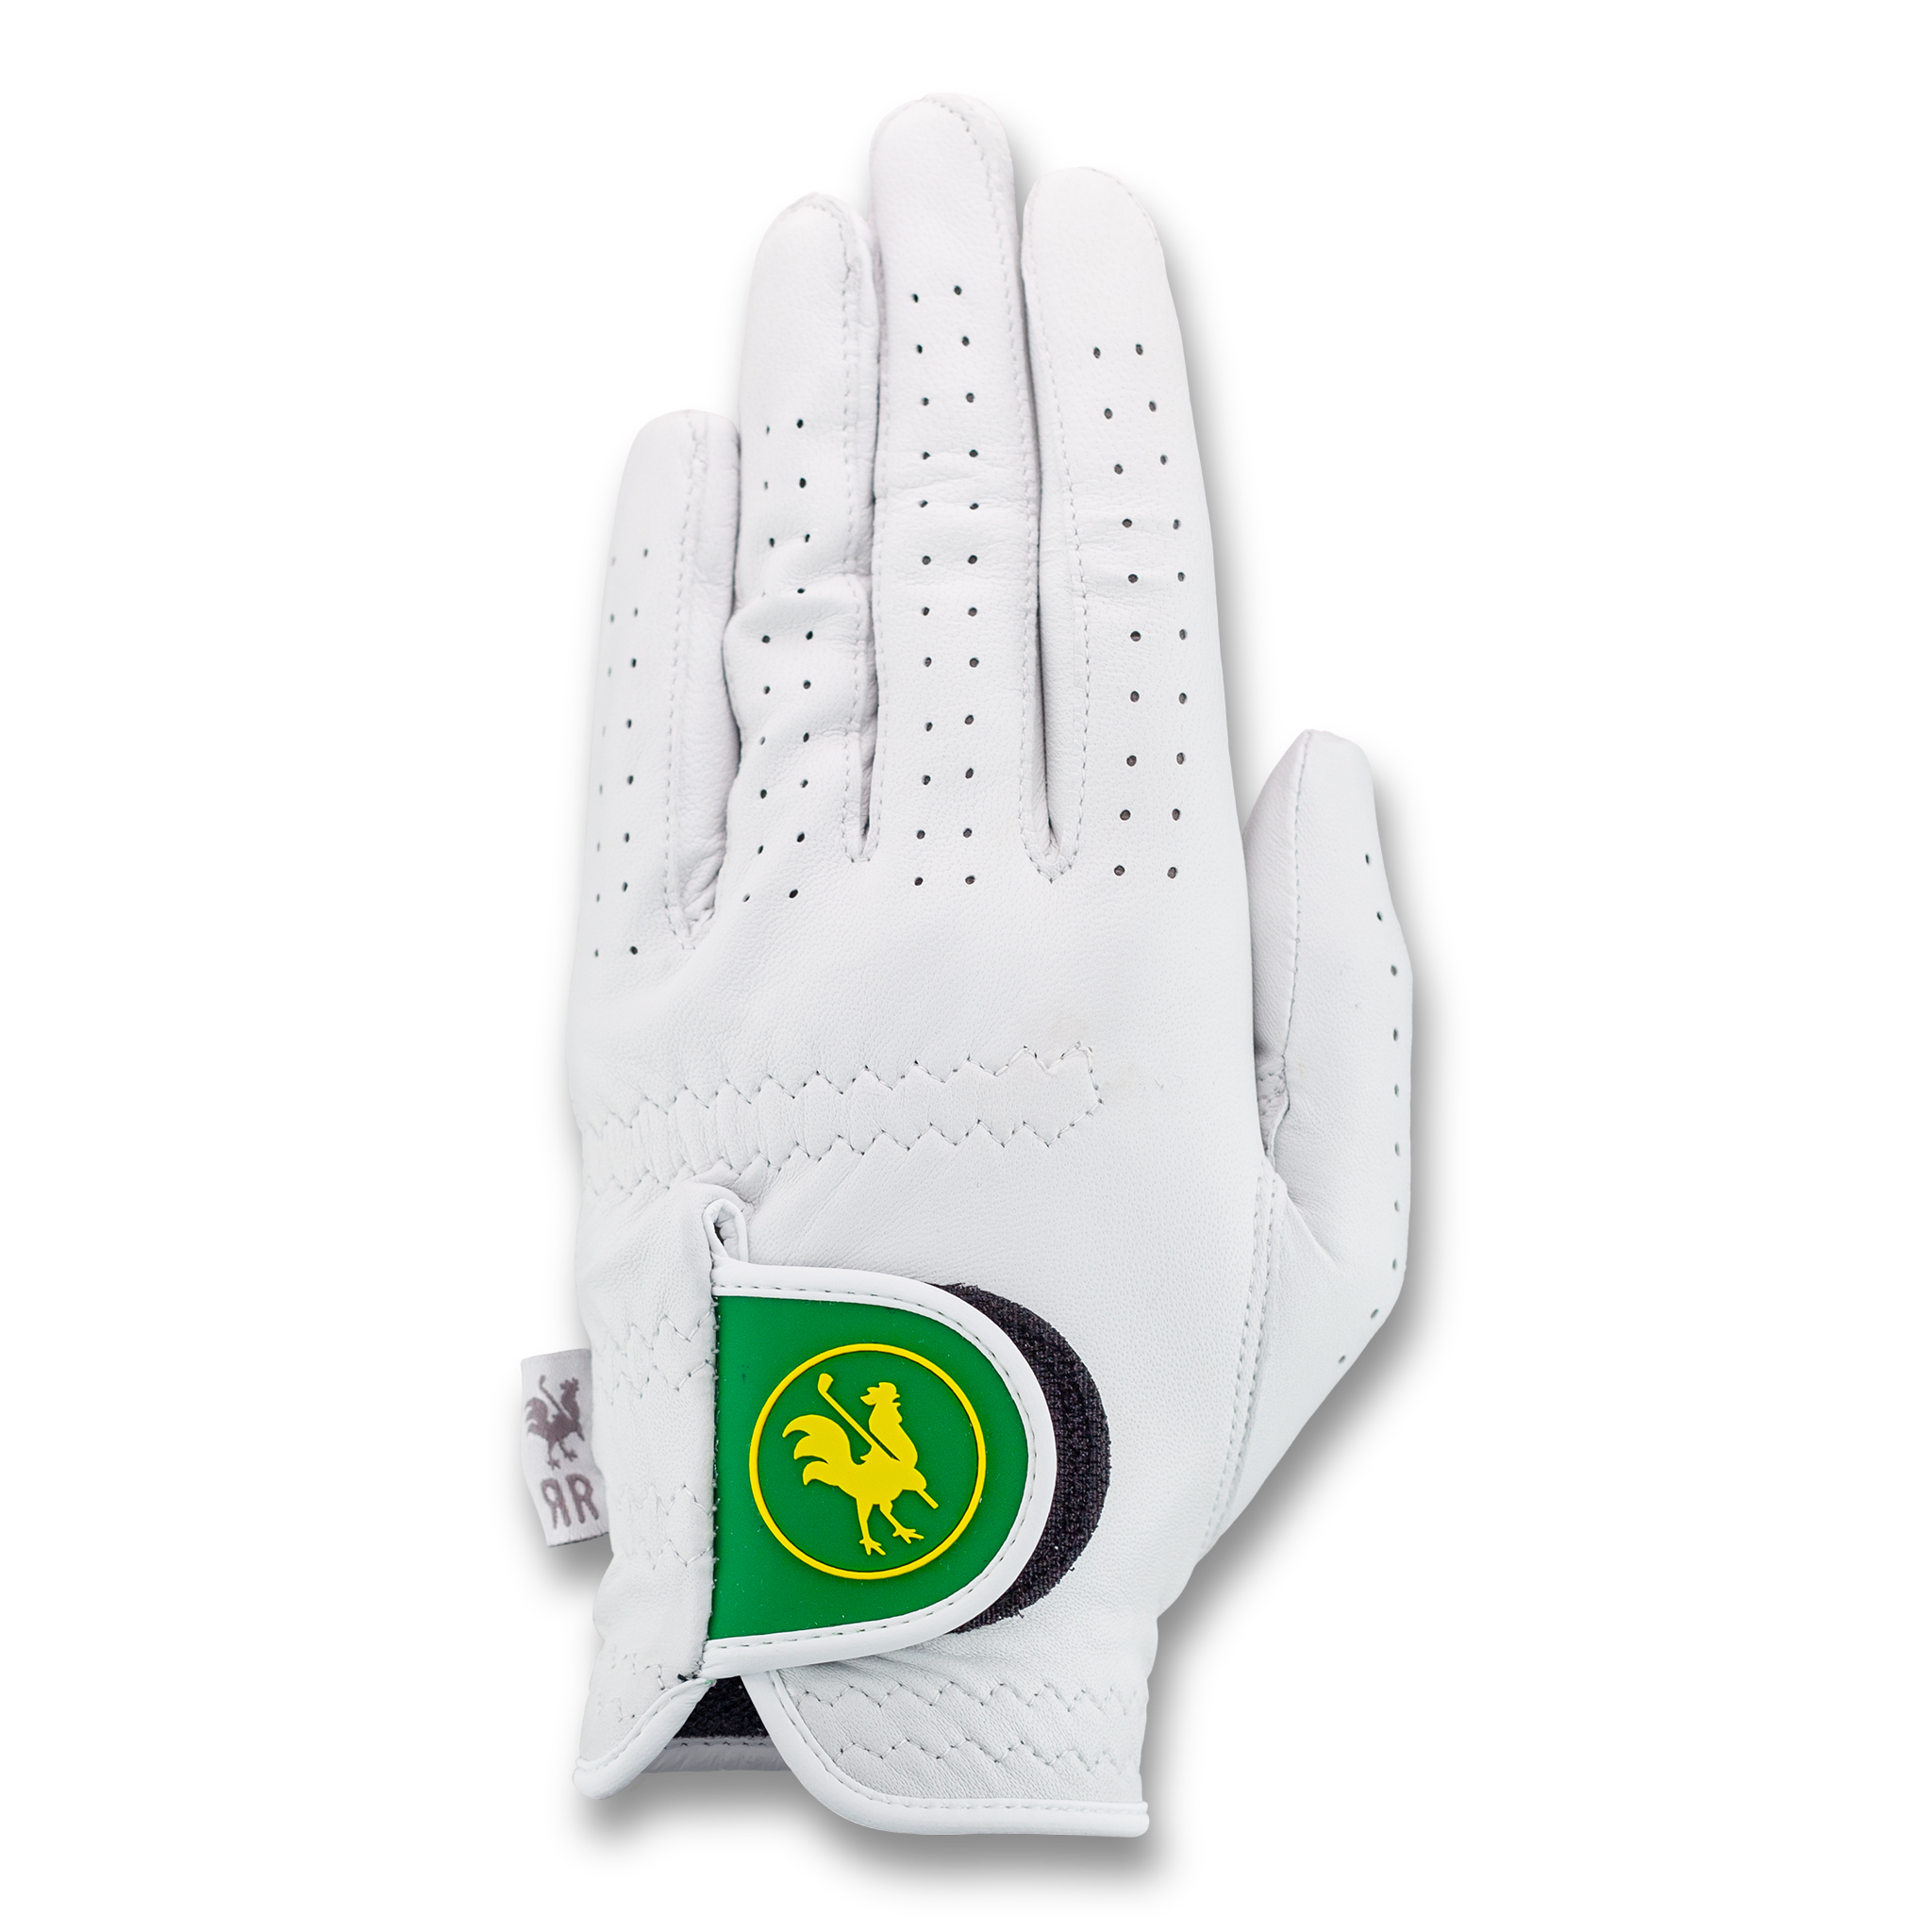 The Scramble left hand golf glove